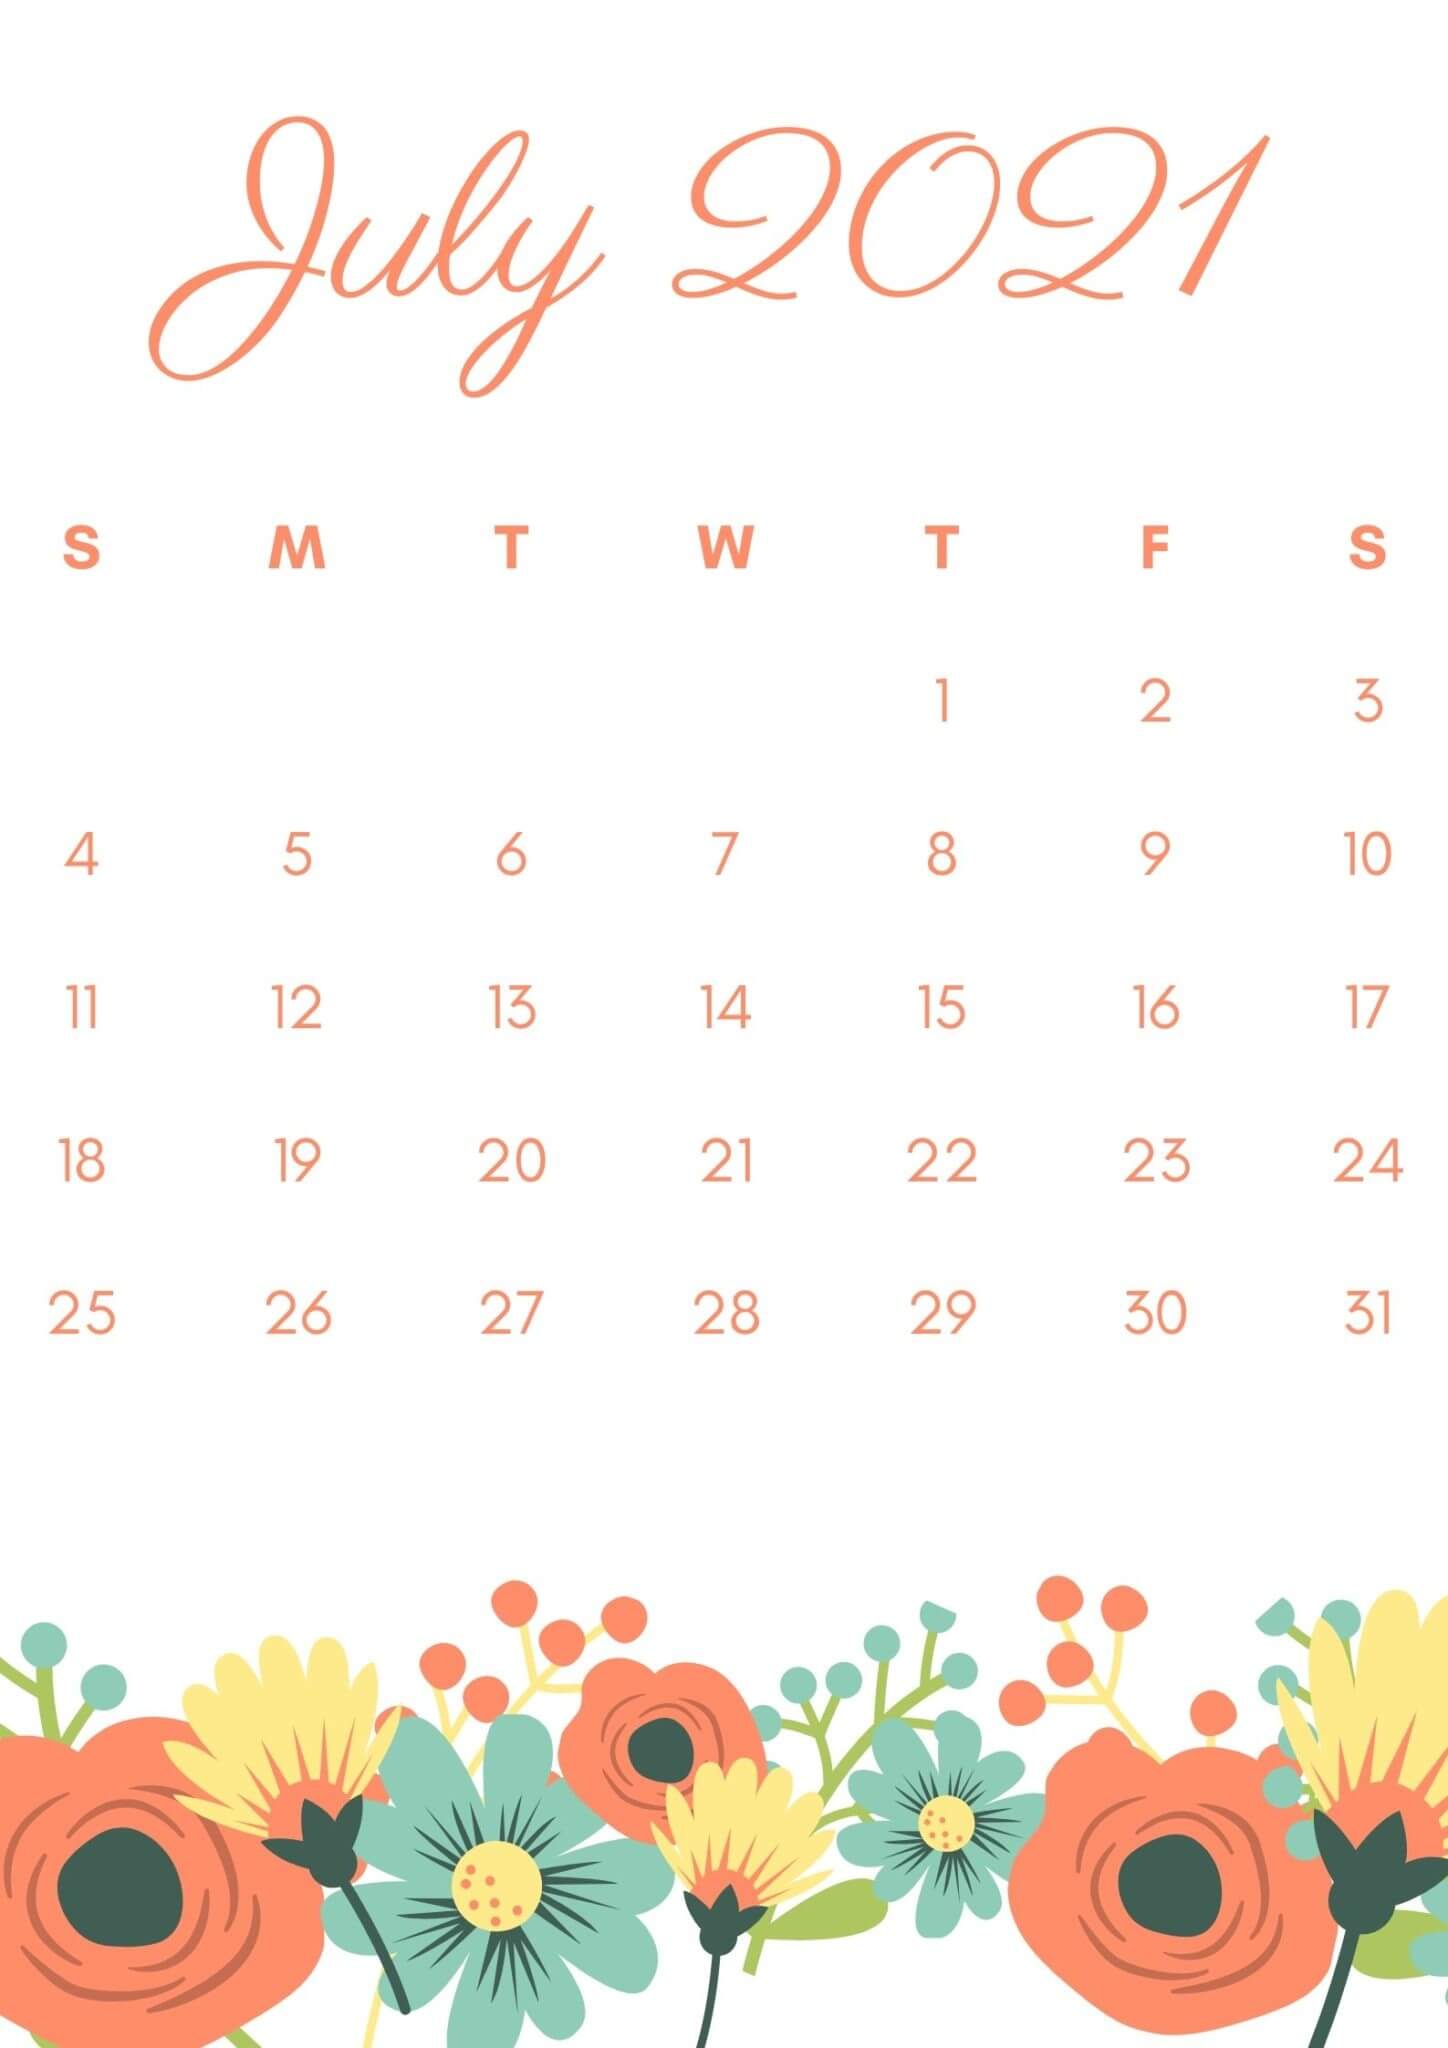 July 2021 Floral Calendar Wallpaper